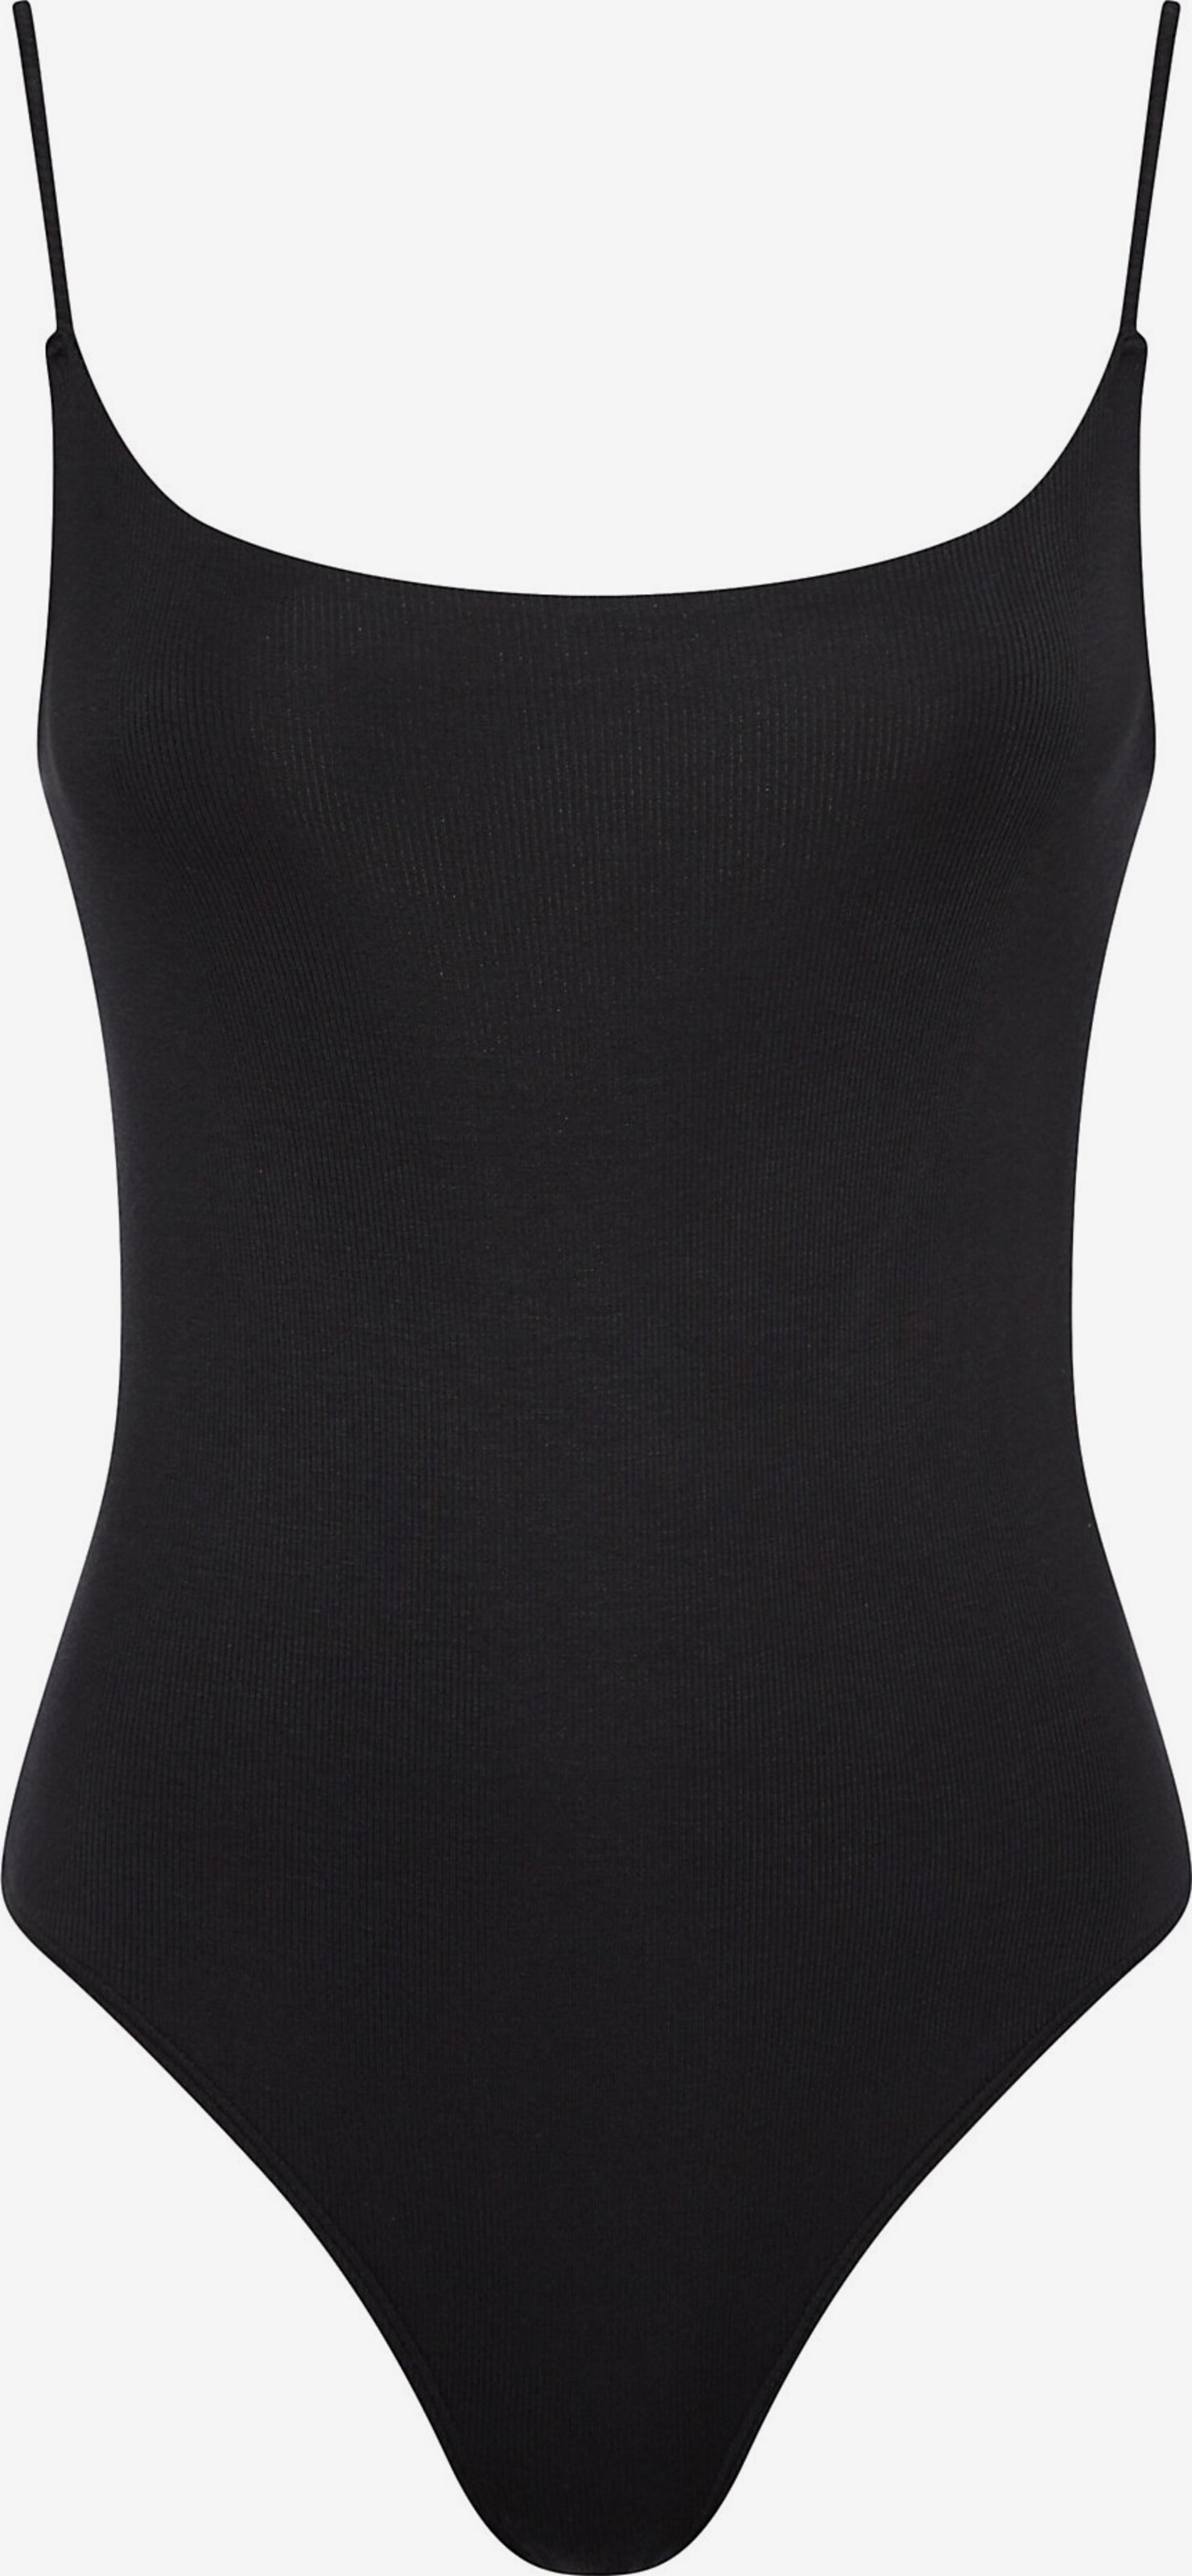 Comprar Tanga Calvin Klein -3 Pack- Radiant en color Negro, Blanco